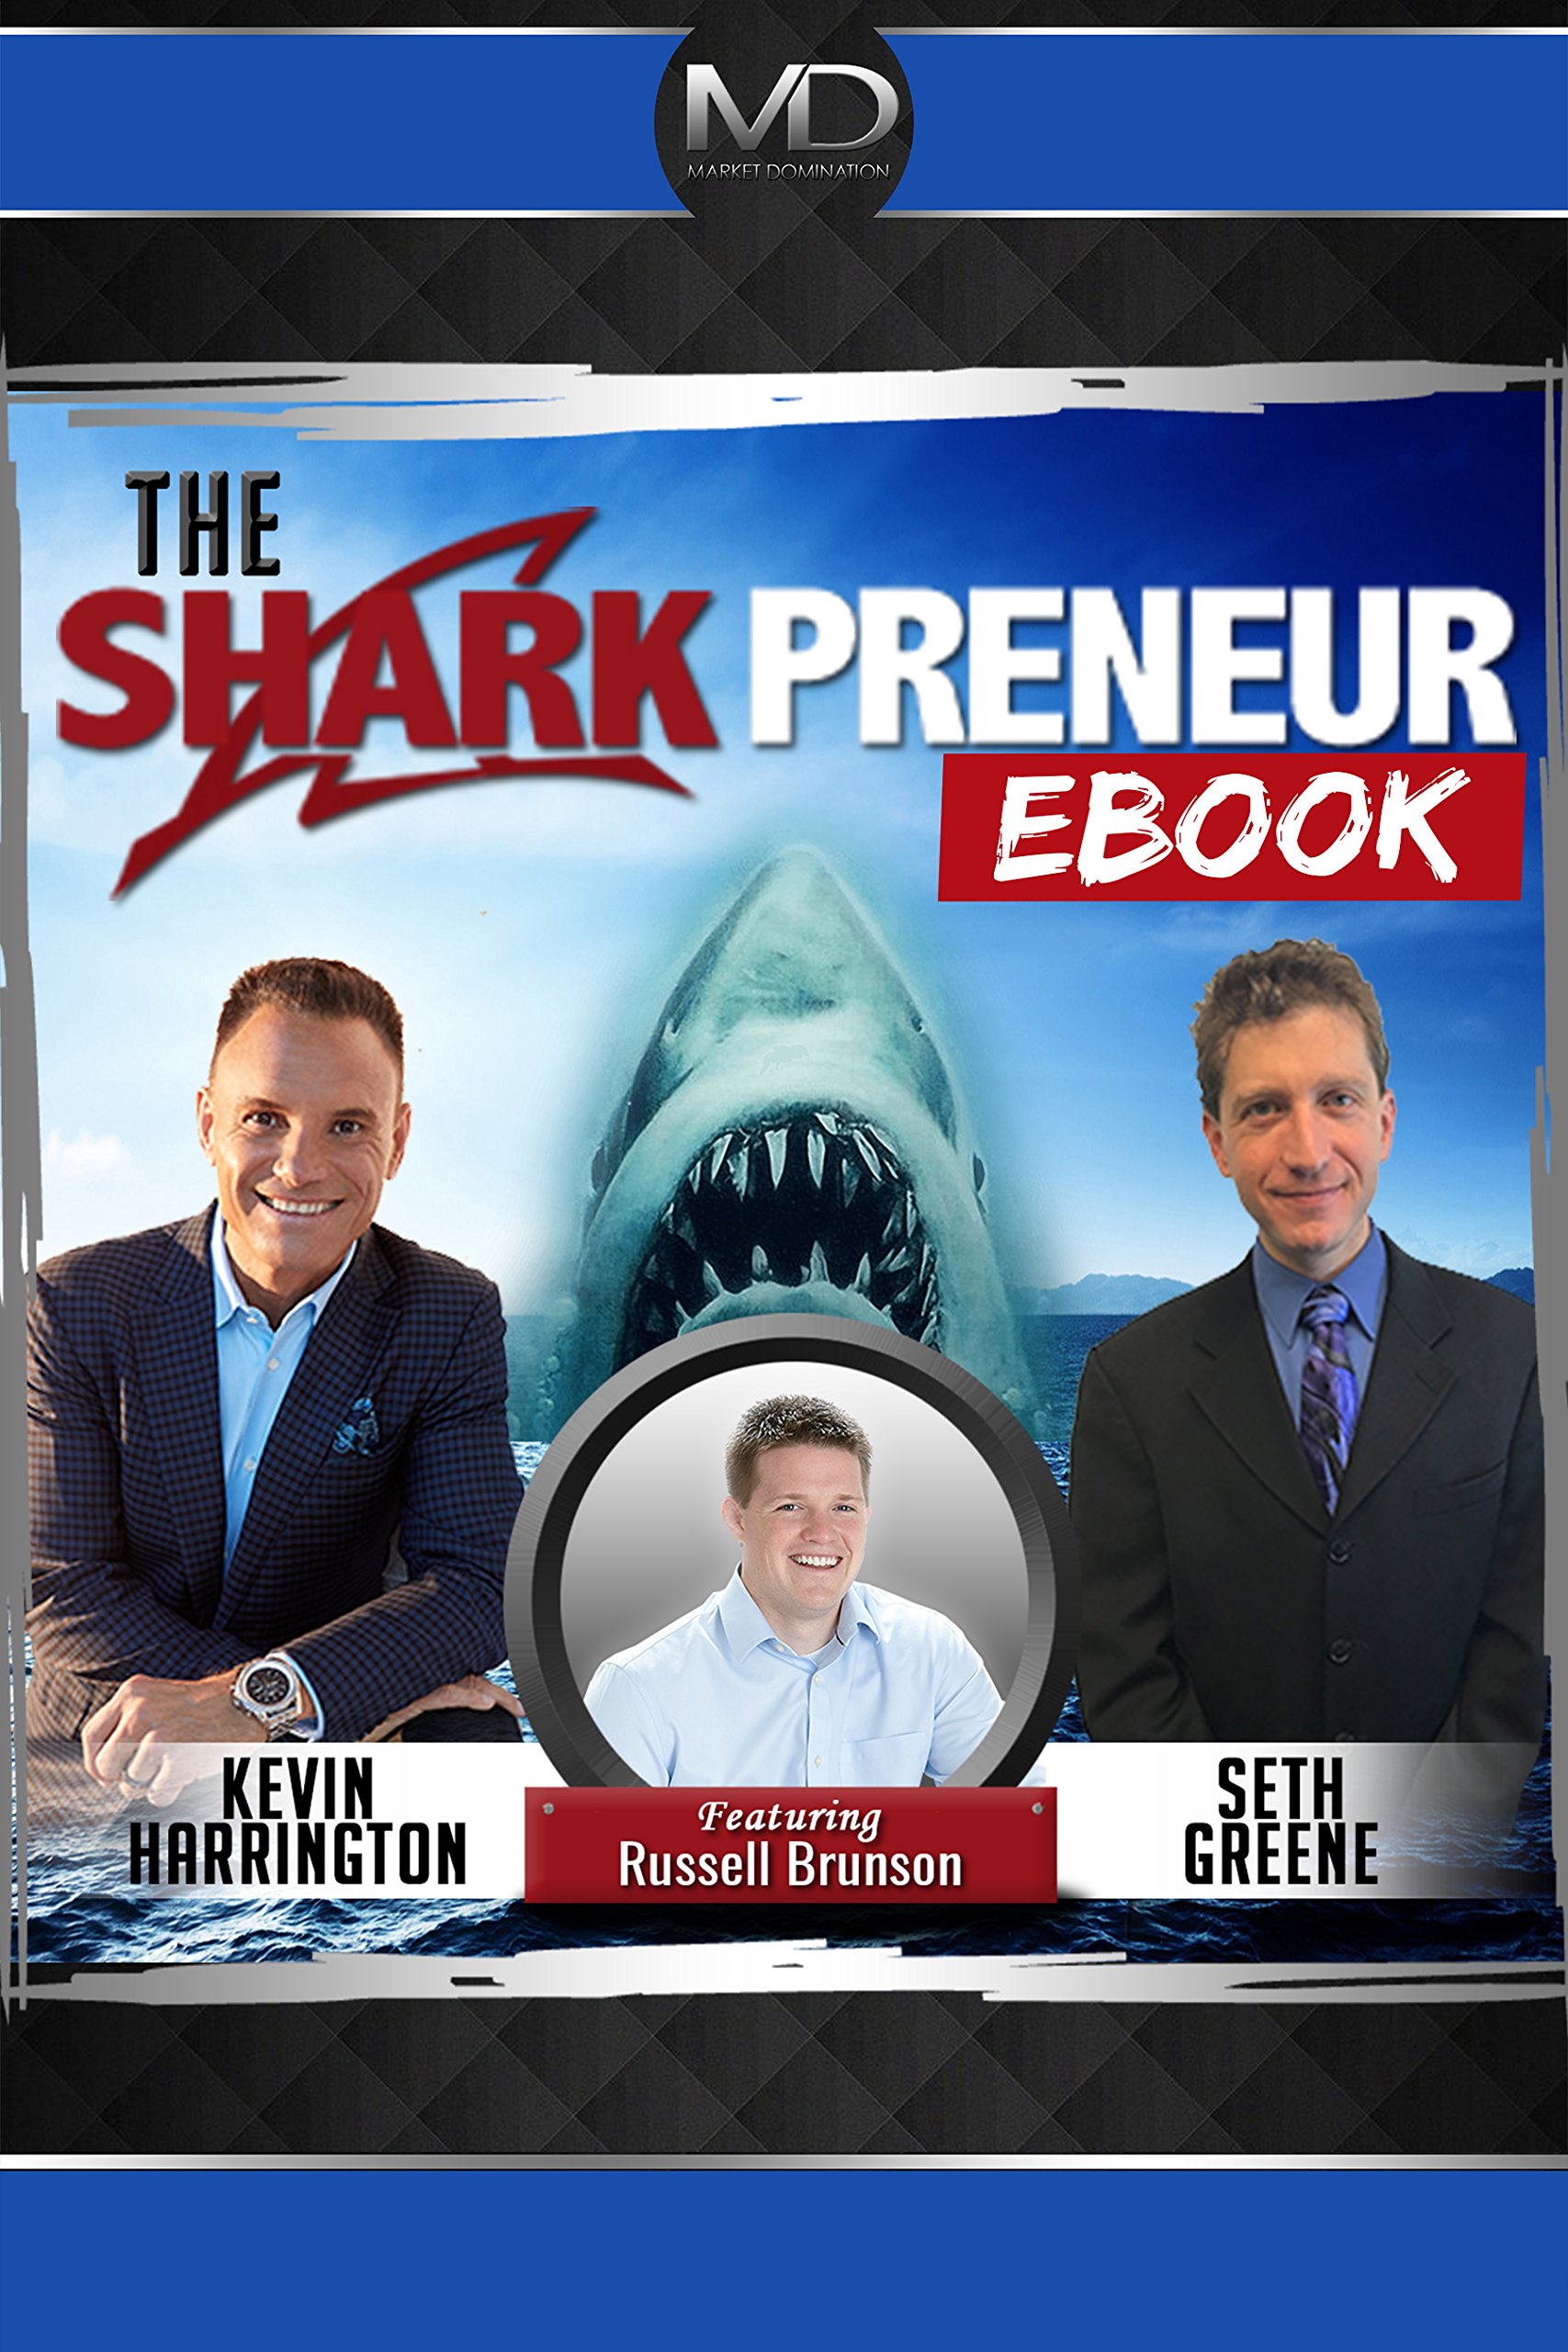 The SharkPreneur Ebook: with Russell Brunson of ClickFunnels